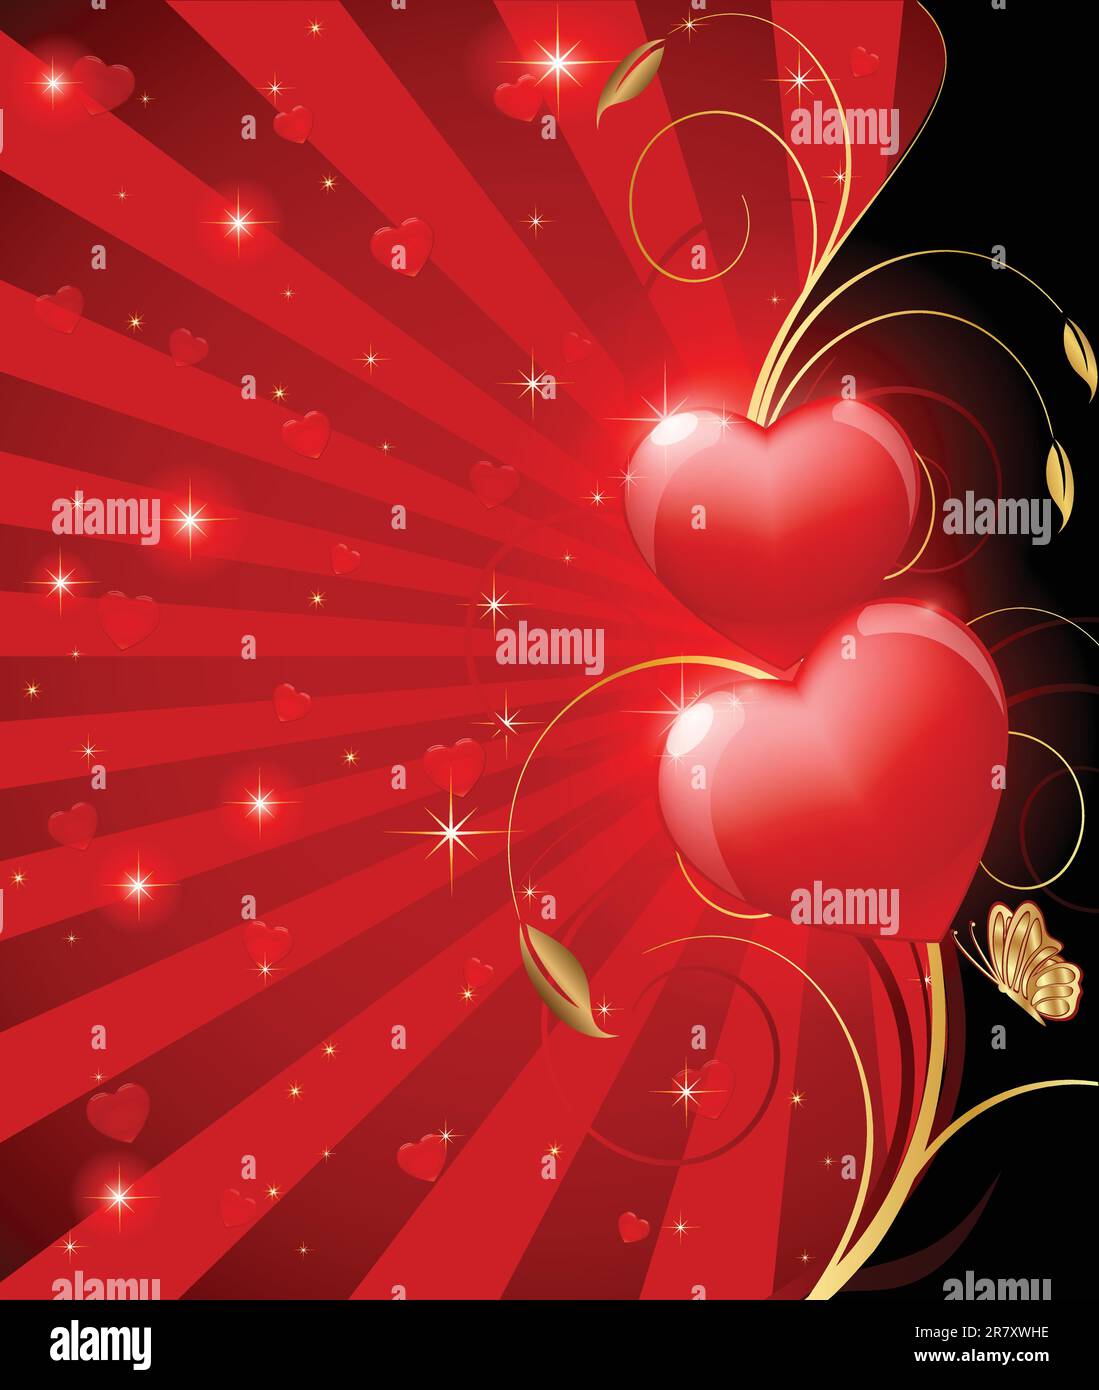 Red heart illustration Stock Vector